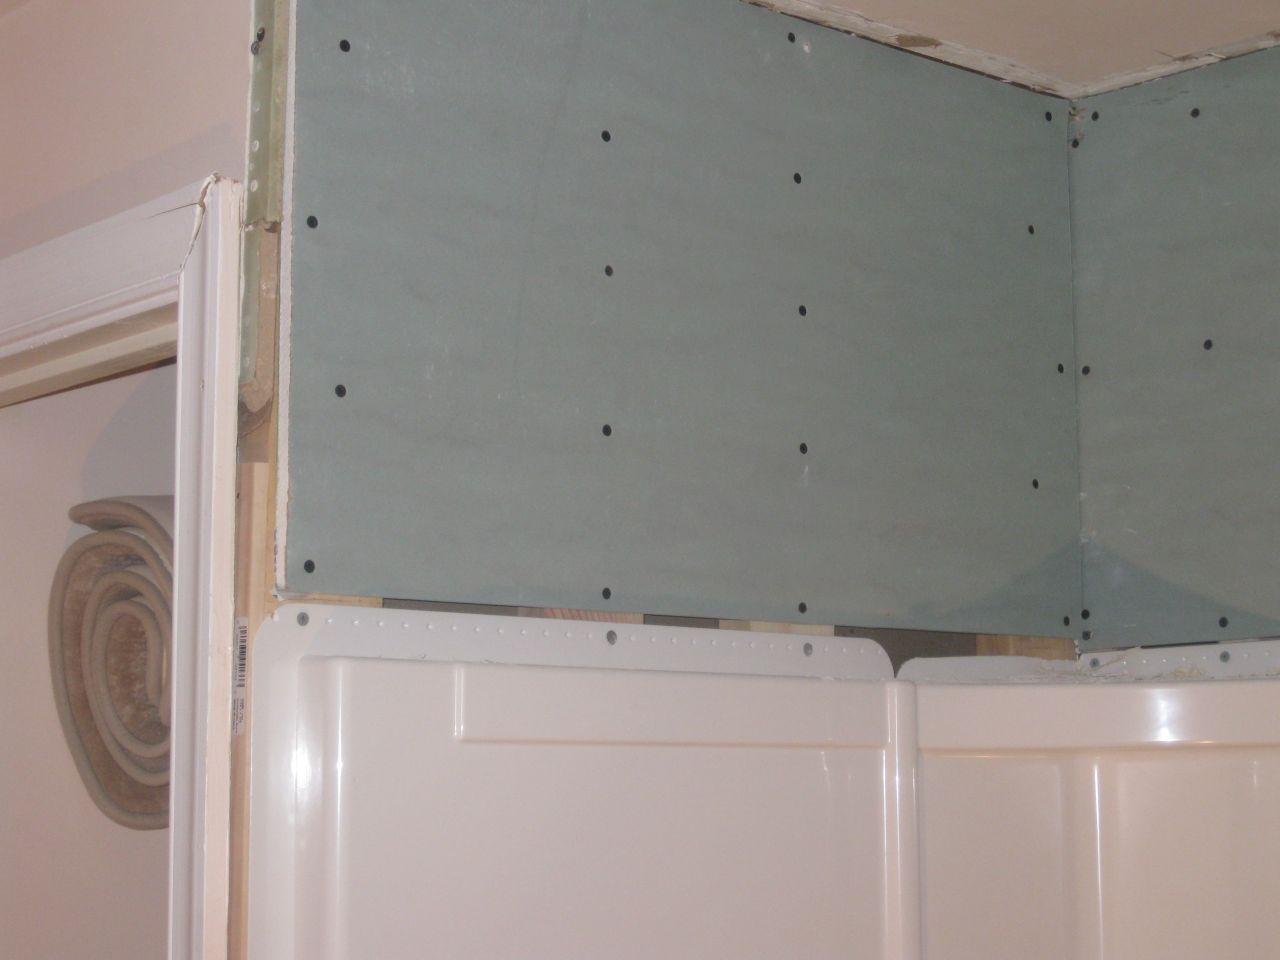 Tile Over Drywall Bathroom
 Can I Install Tile Over Drywall